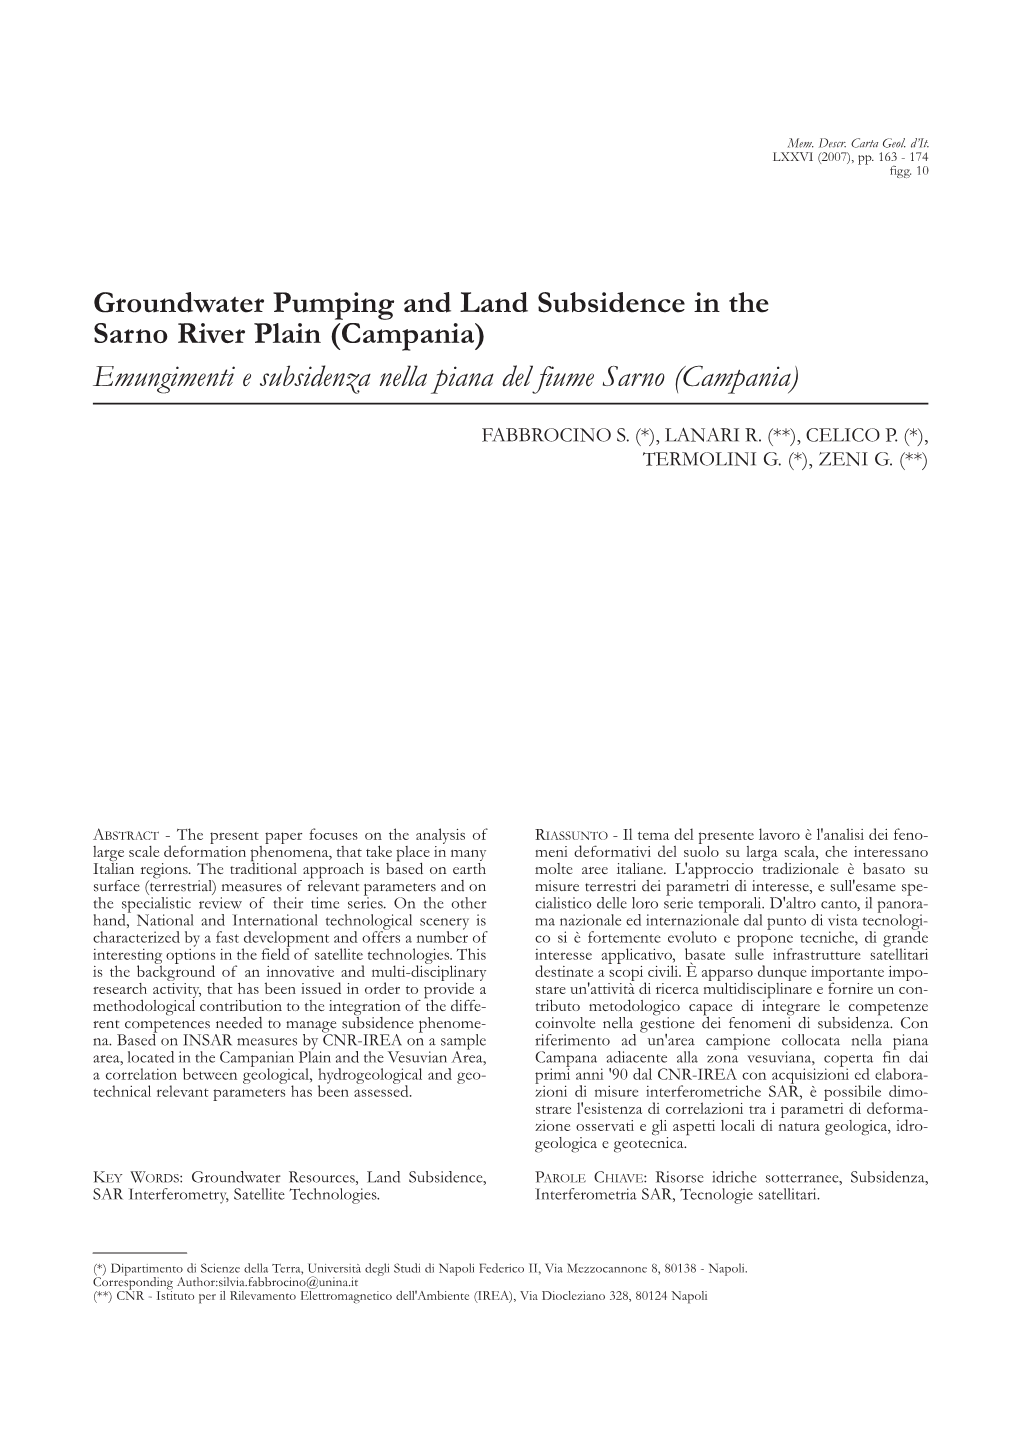 Groundwater Pumping and Land Subsidence in the Sarno River Plain (Campania) Emungimenti E Subsidenza Nella Piana Del Fiume Sarno (Campania)